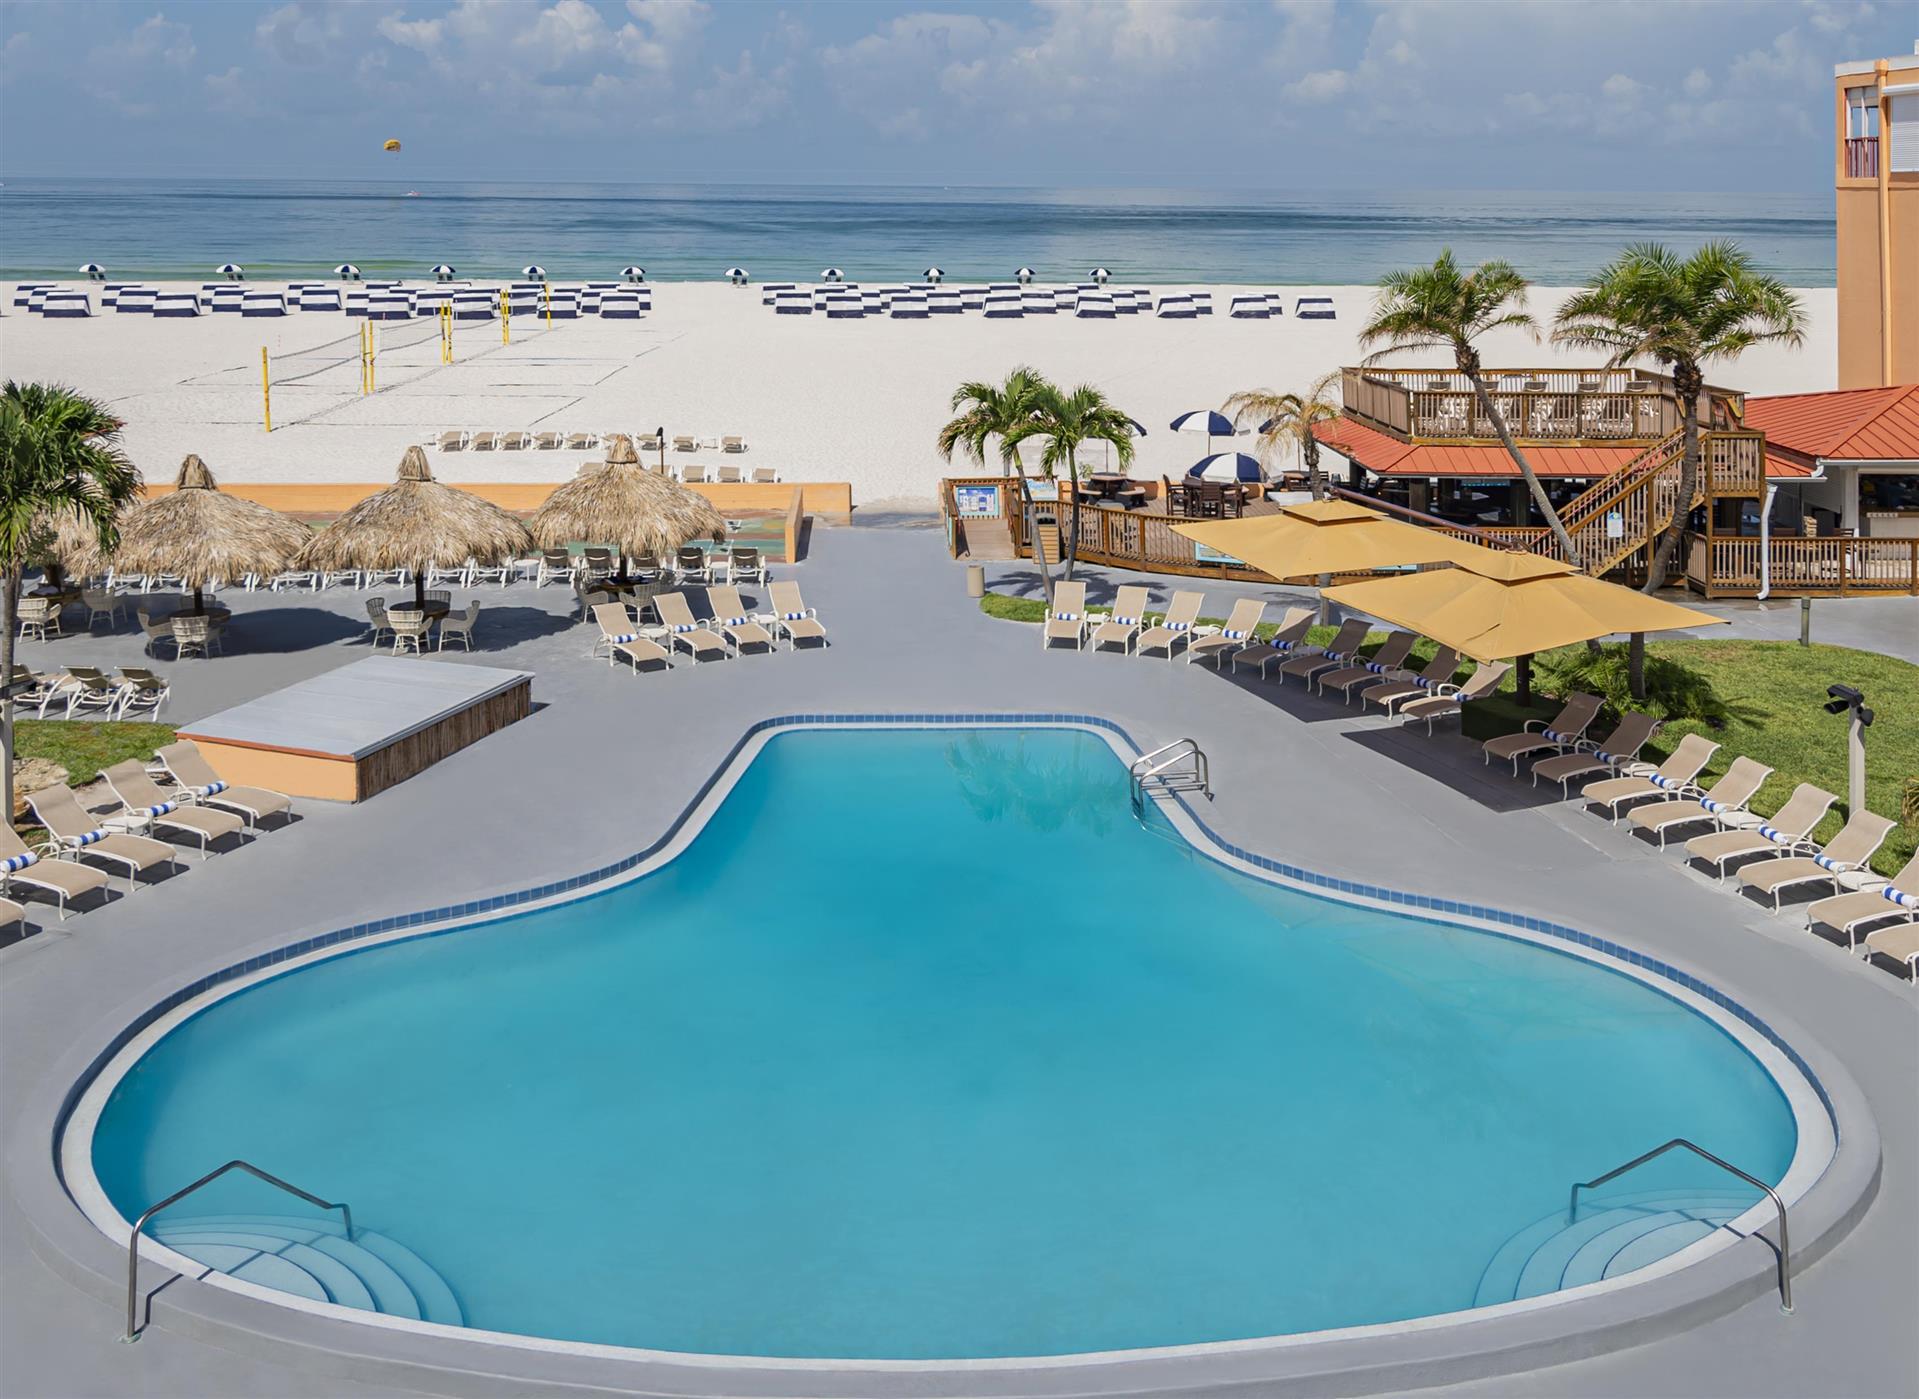 Dolphin Beach Resort in St. Pete Beach, FL